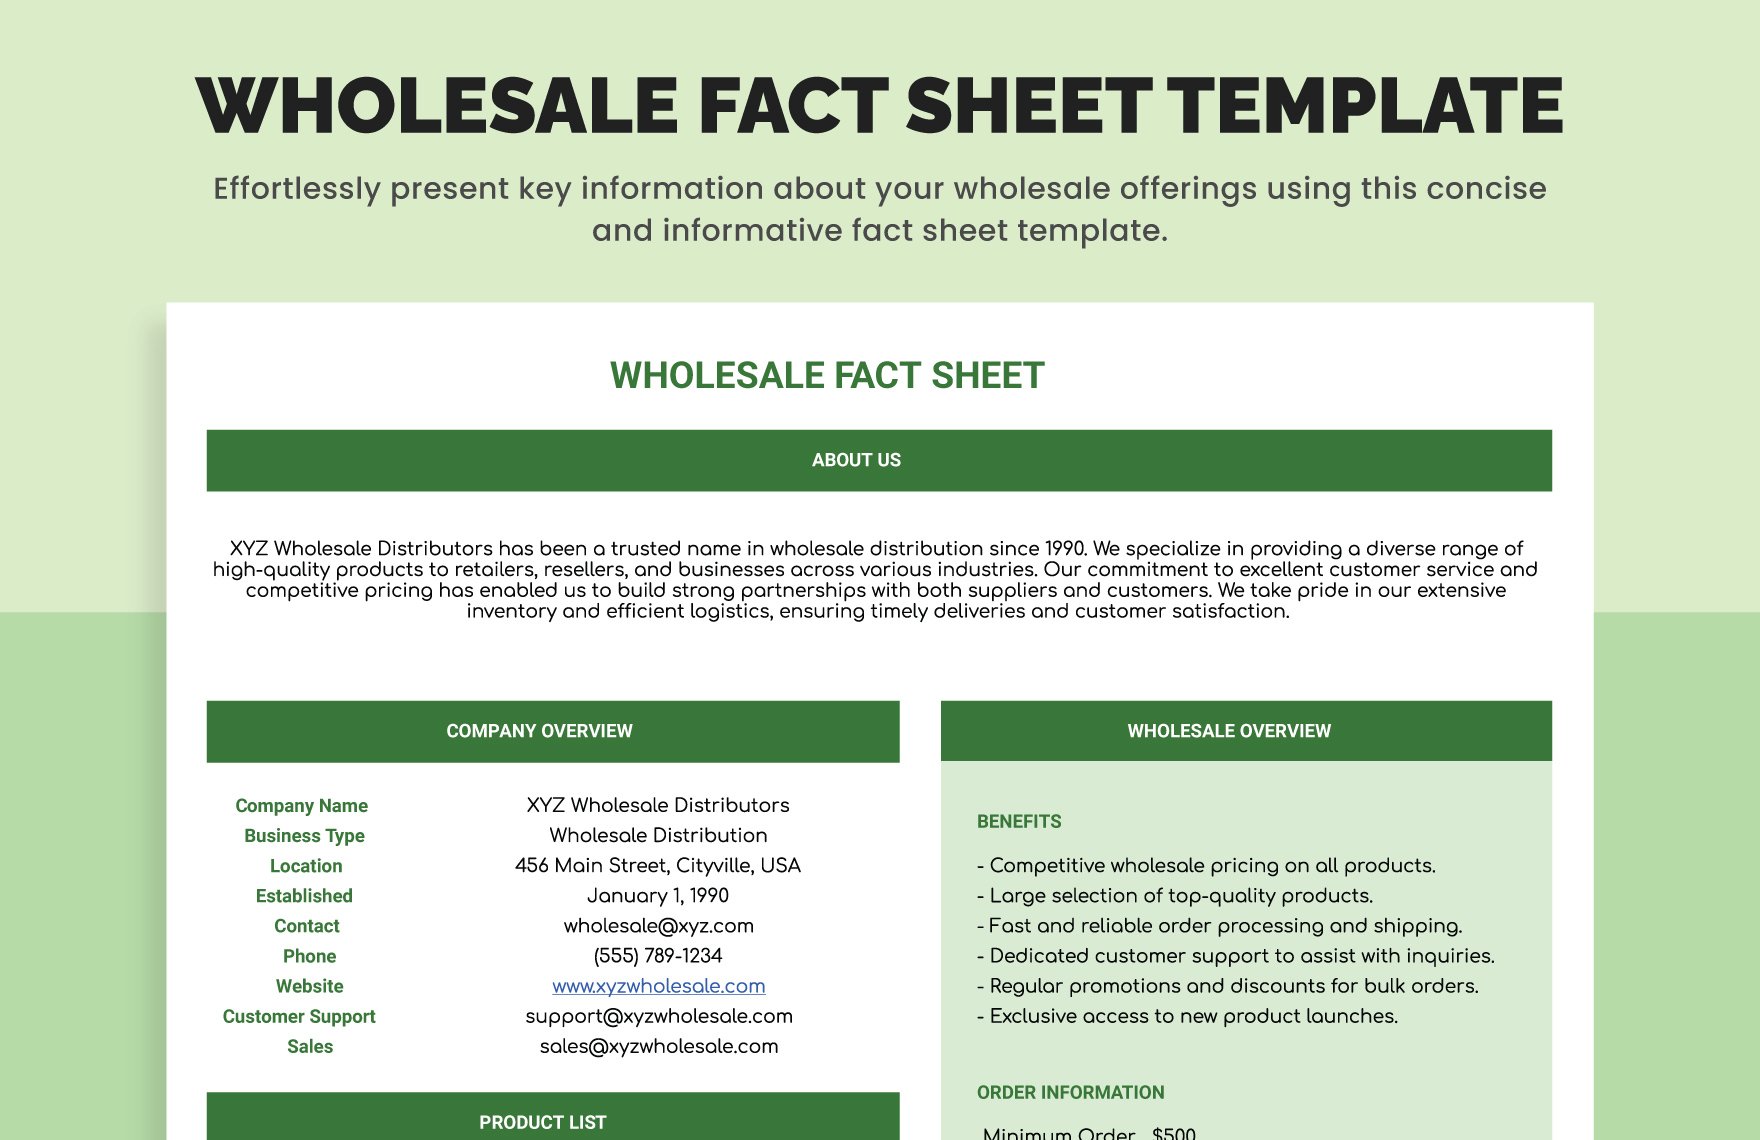 Wholesale Fact Sheet template